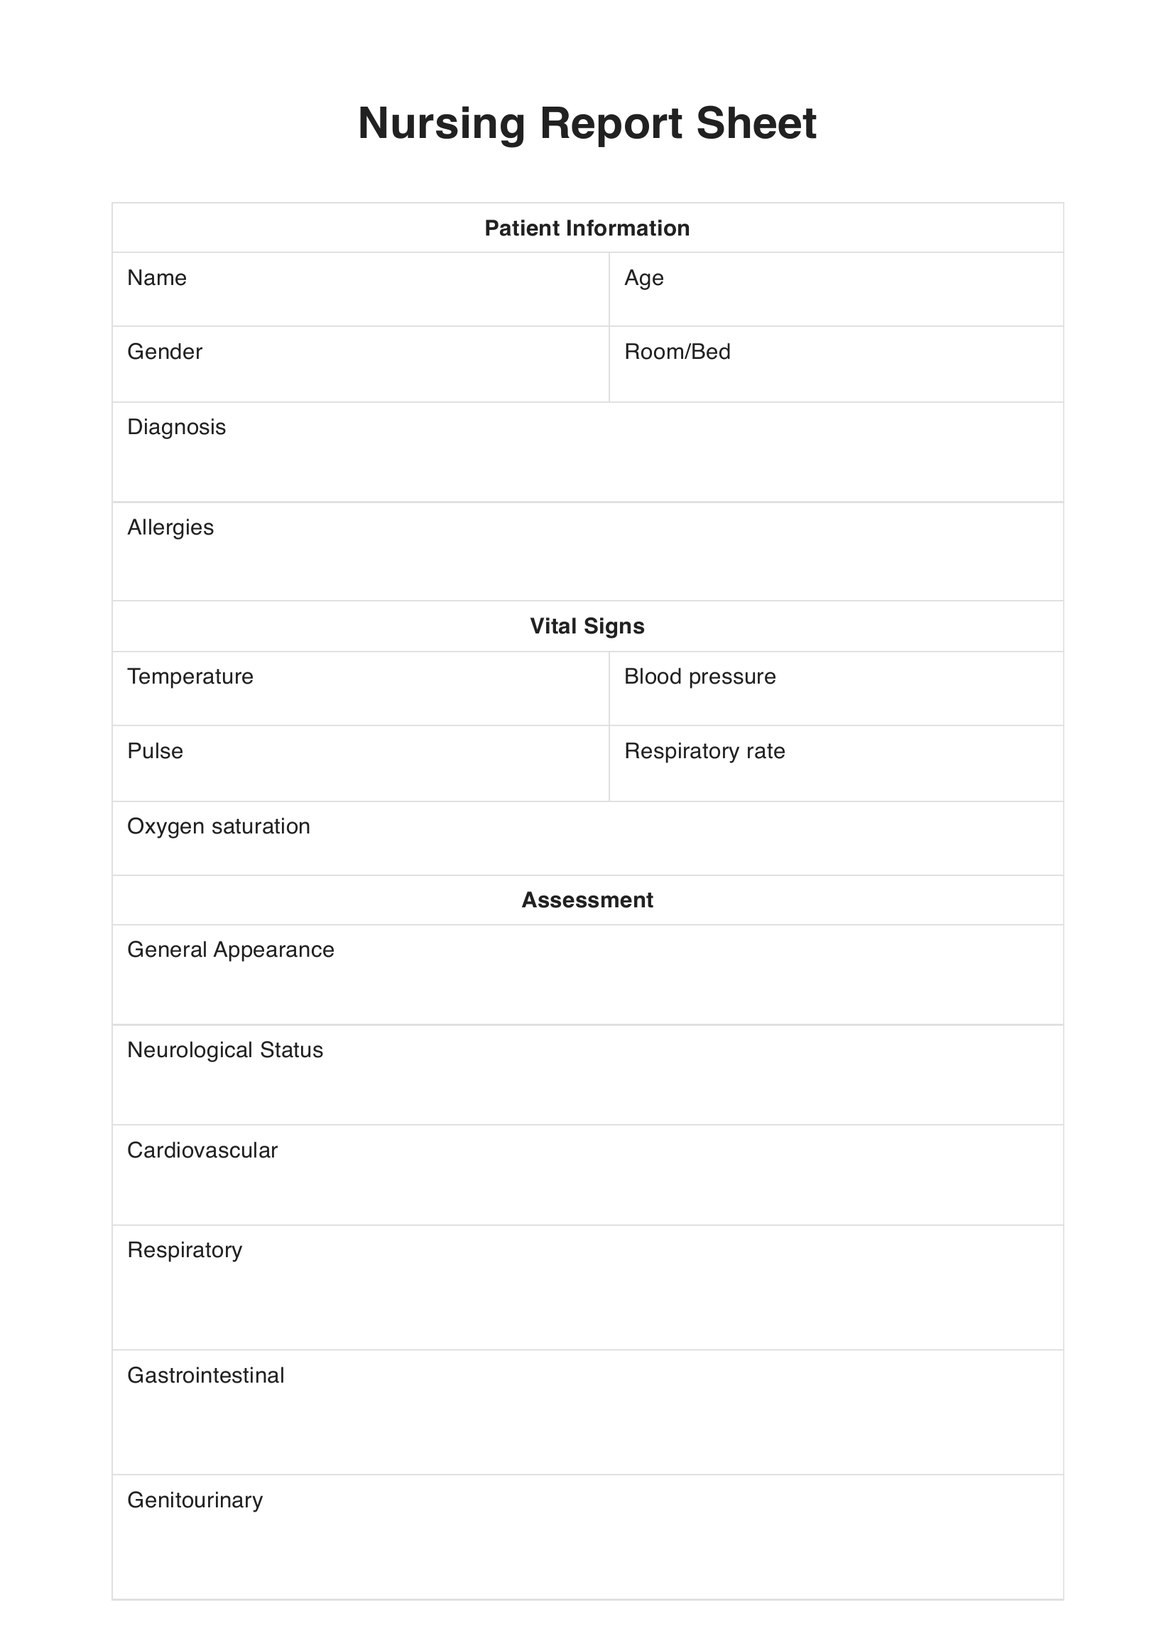 Nursing Report Sheets PDF Example